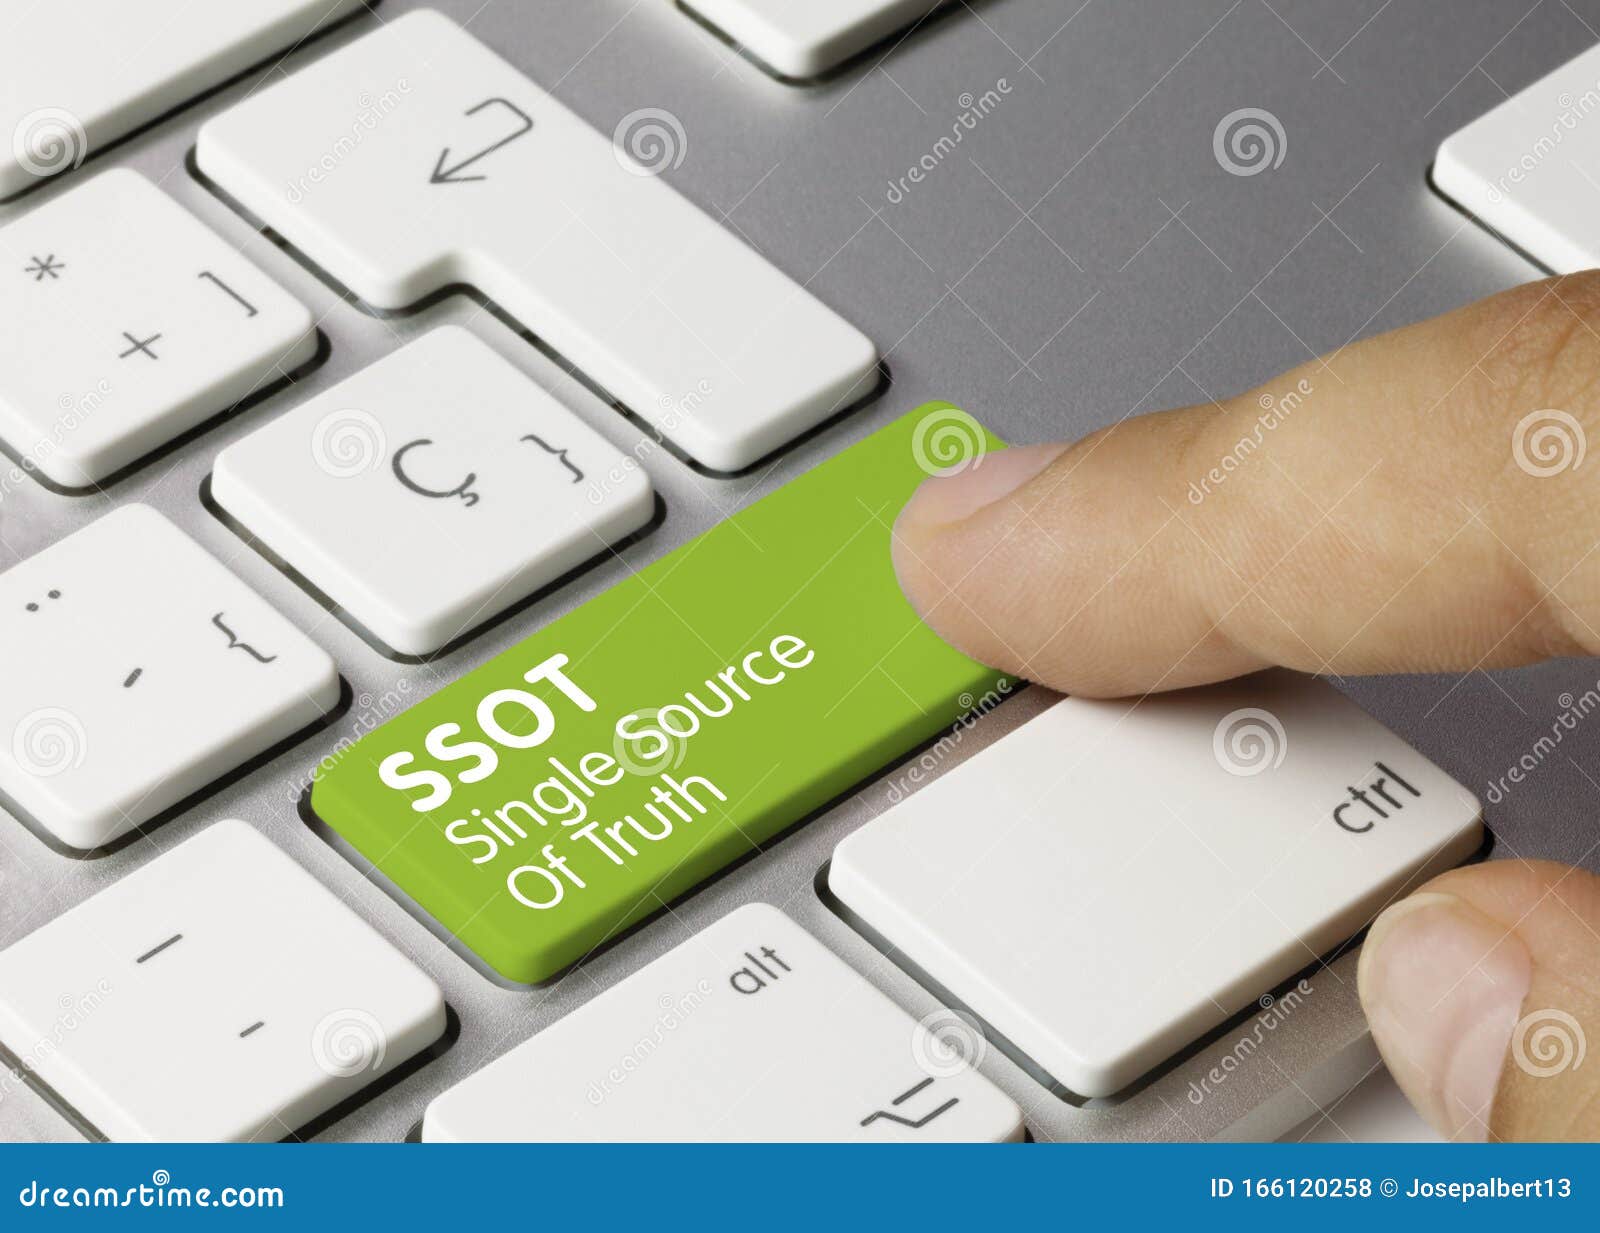 ssot single source of truth - inscription on green keyboard key